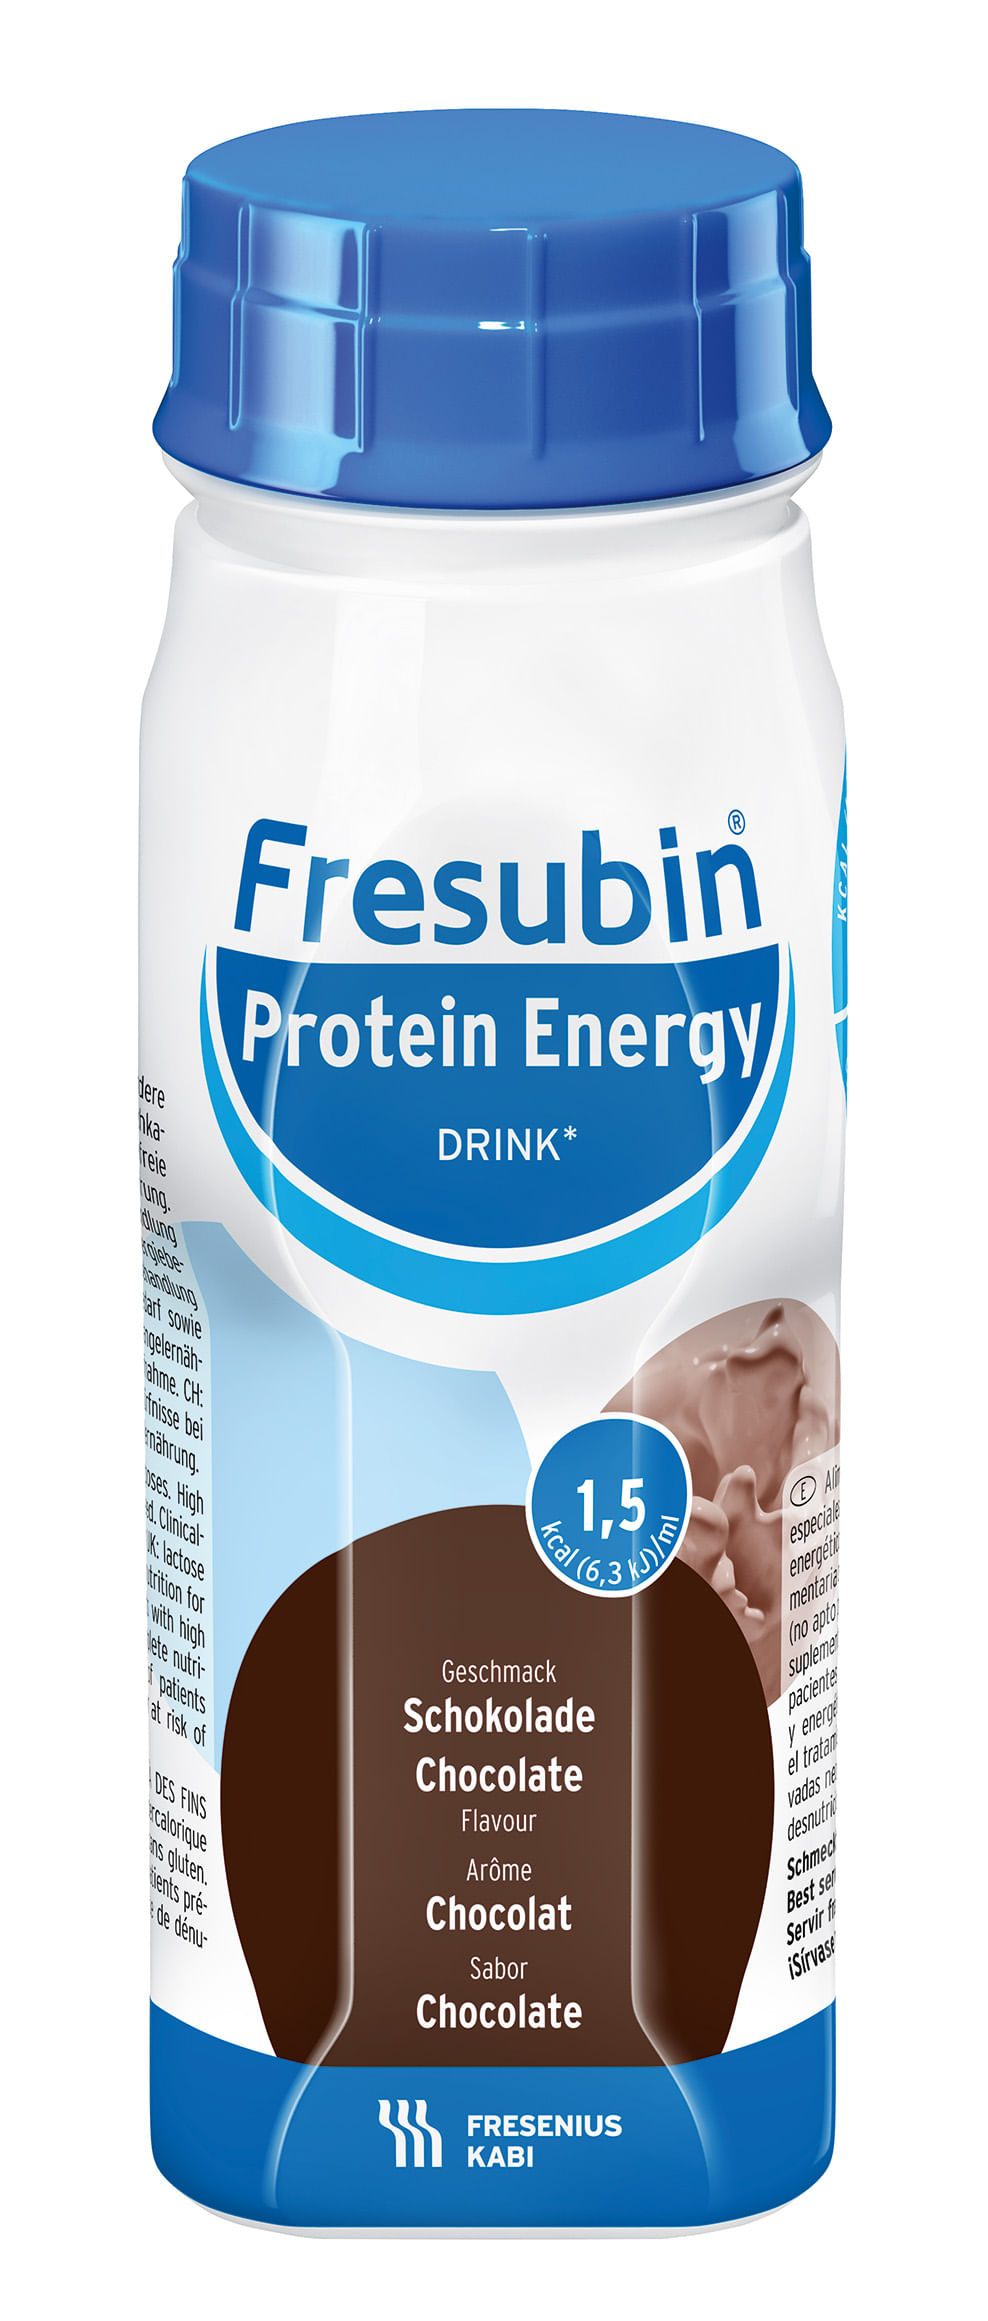 Fresubin_Protein_Energy_Chocolate_EBo_Frontal